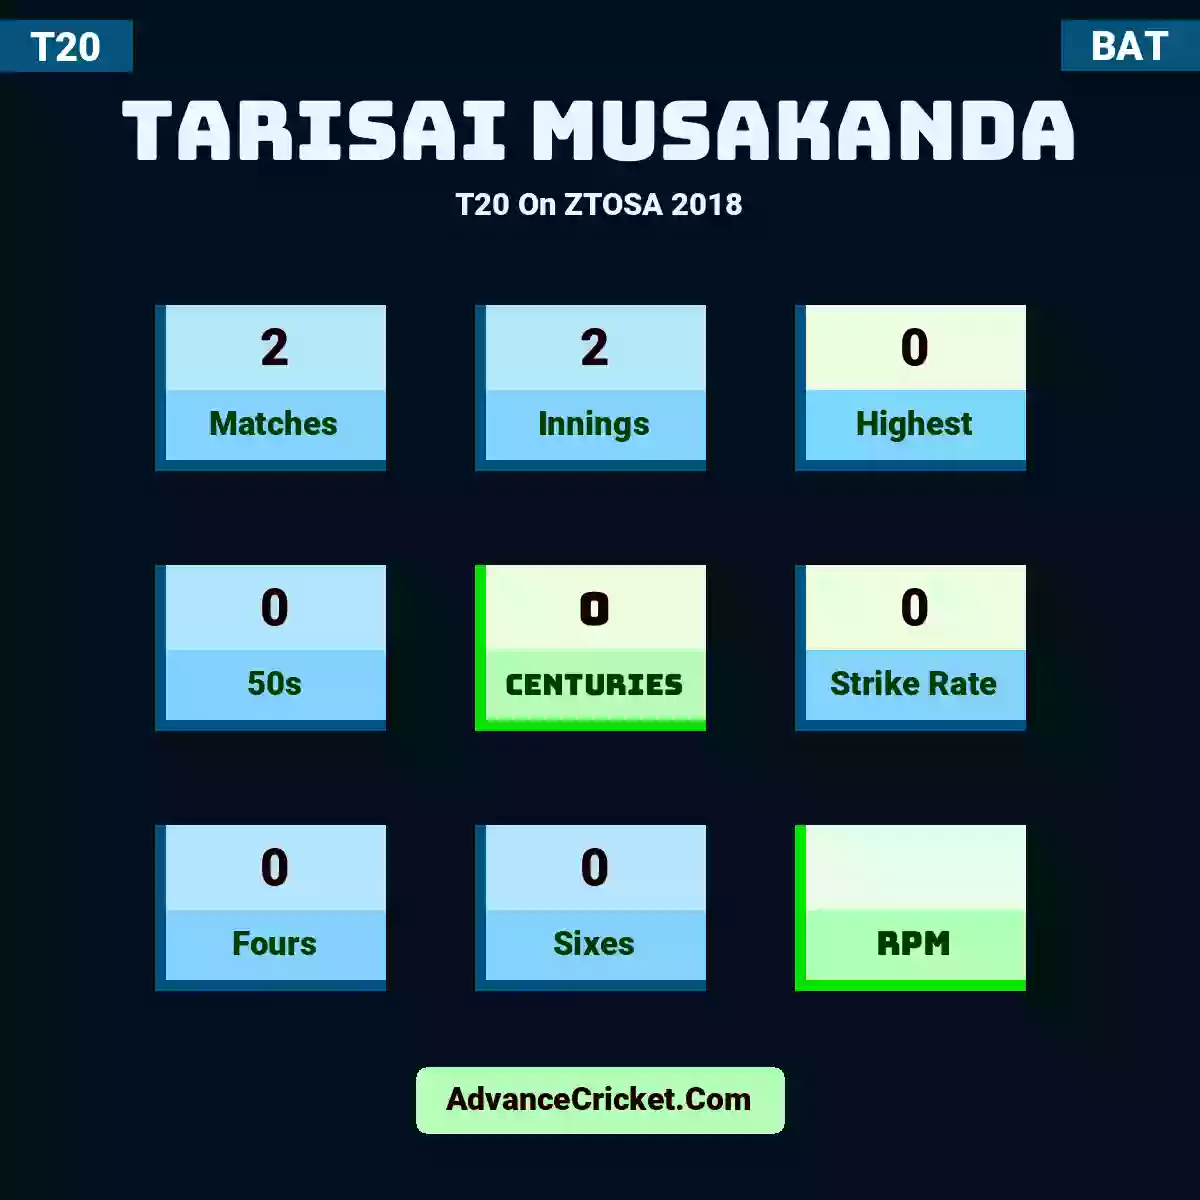 Tarisai Musakanda T20  On ZTOSA 2018, Tarisai Musakanda played 2 matches, scored 0 runs as highest, 0 half-centuries, and 0 centuries, with a strike rate of 0. T.Musakanda hit 0 fours and 0 sixes.